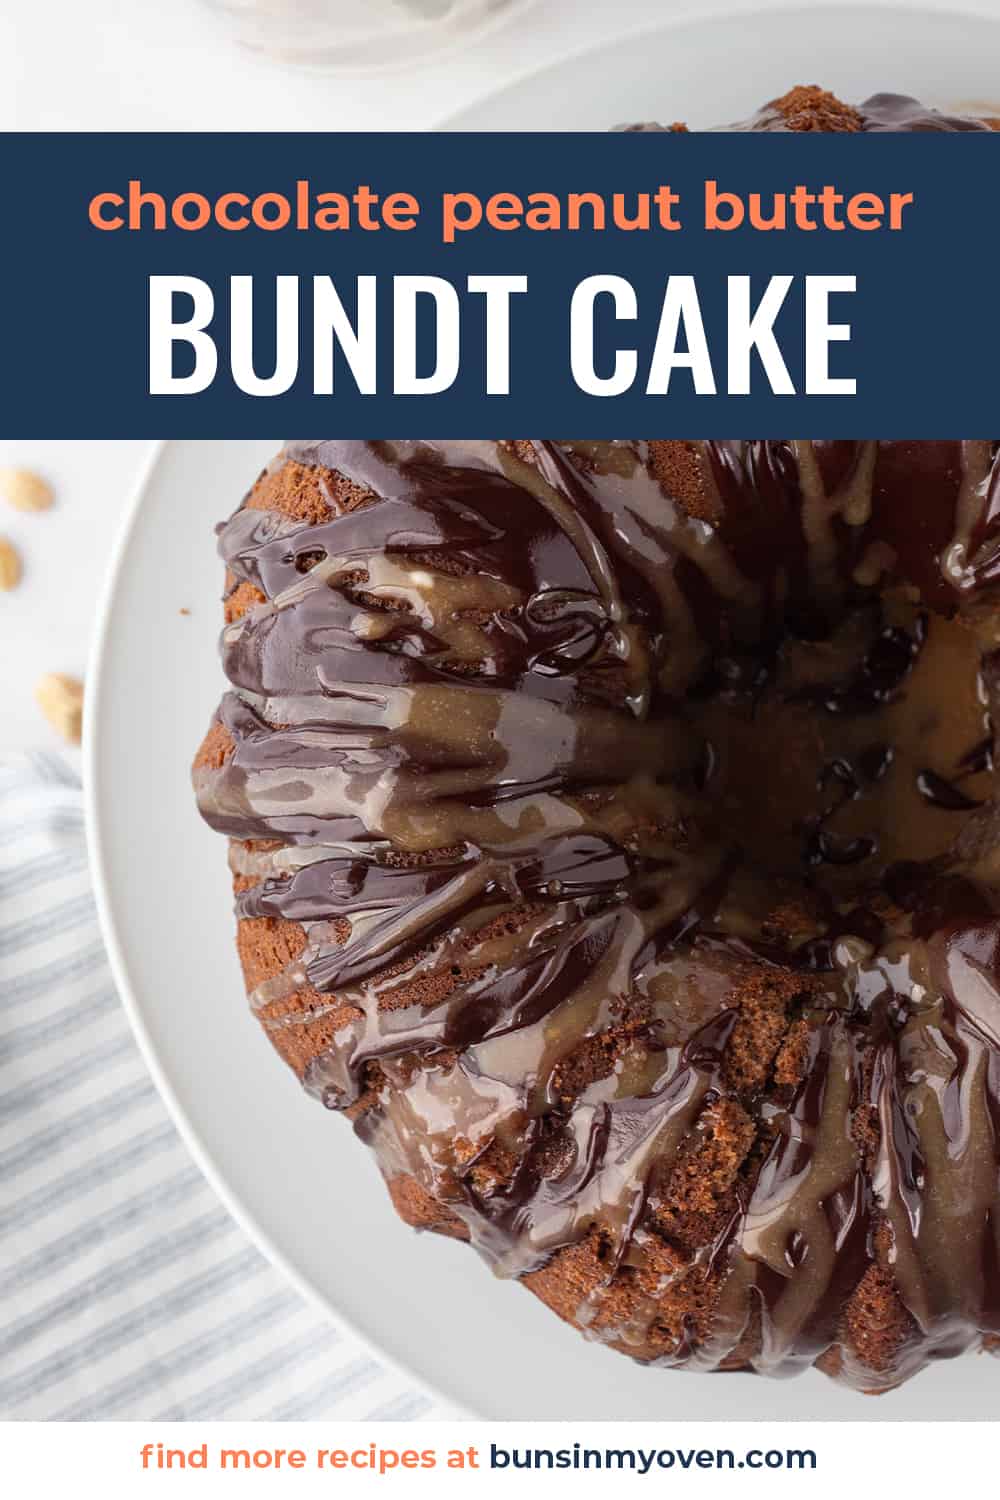 chocolate glazed bundt cake with text for Pinterest.